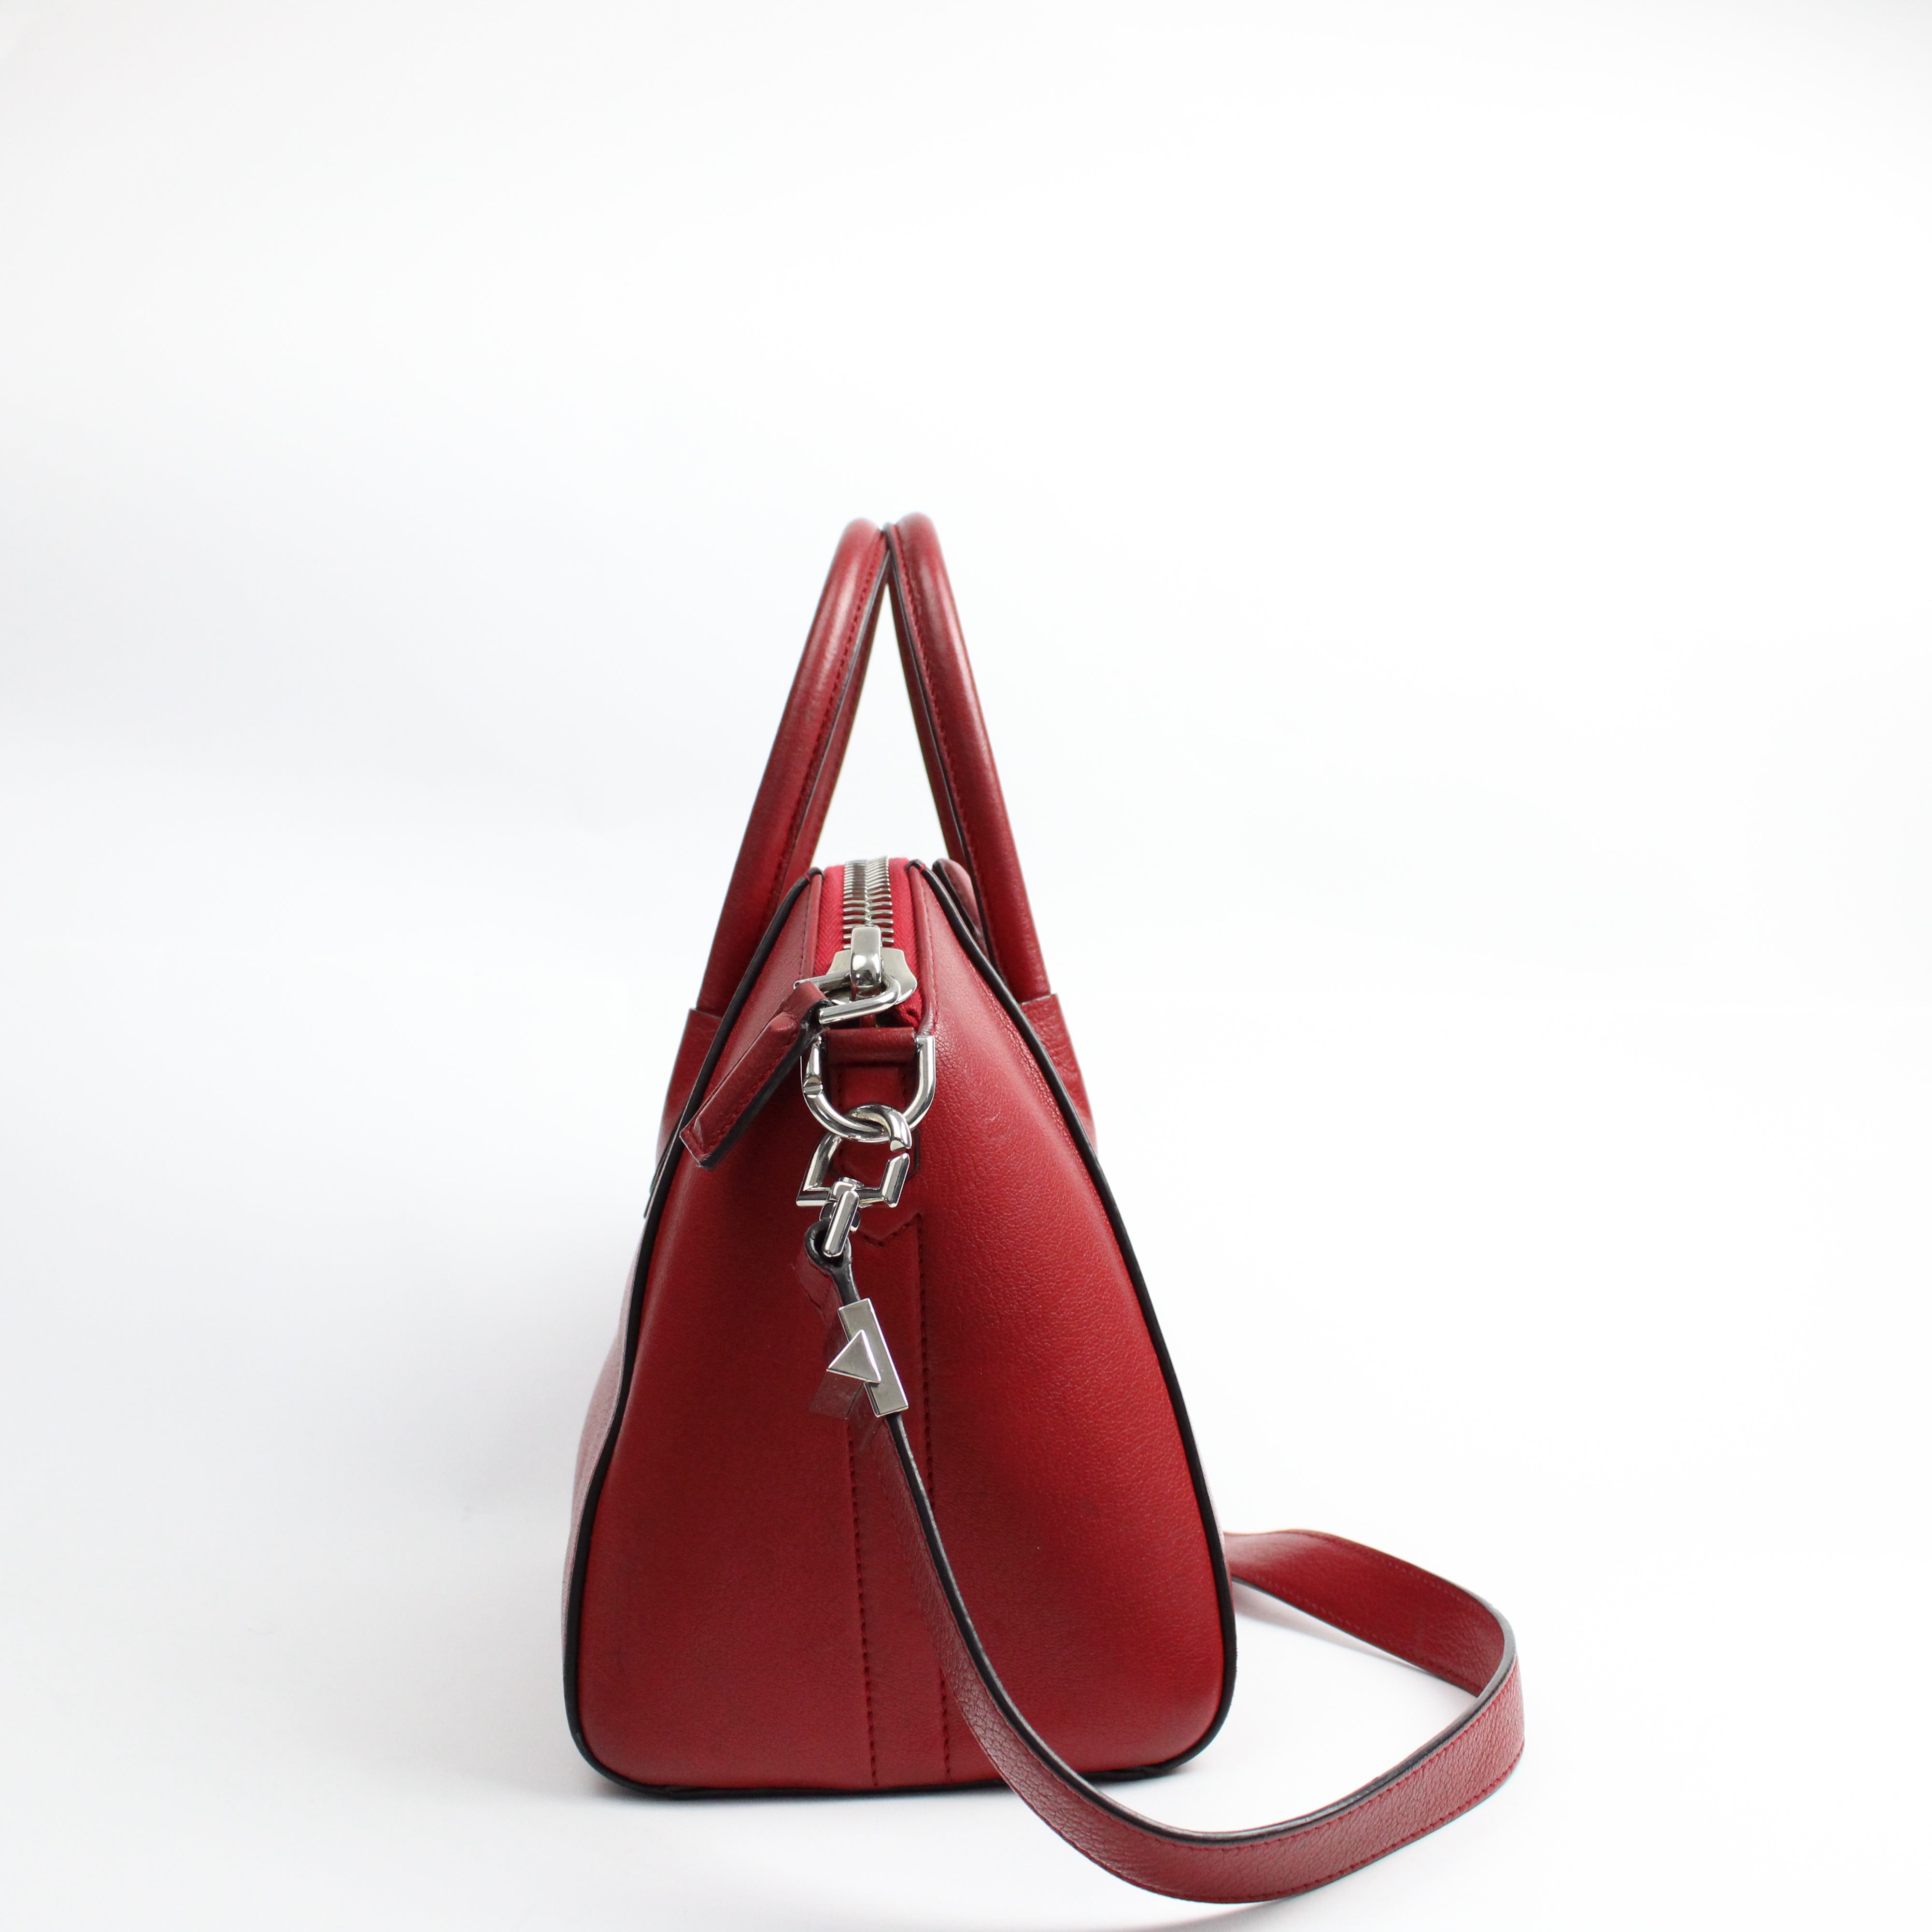 Givenchy Antigona Medio In Pelle Rossa